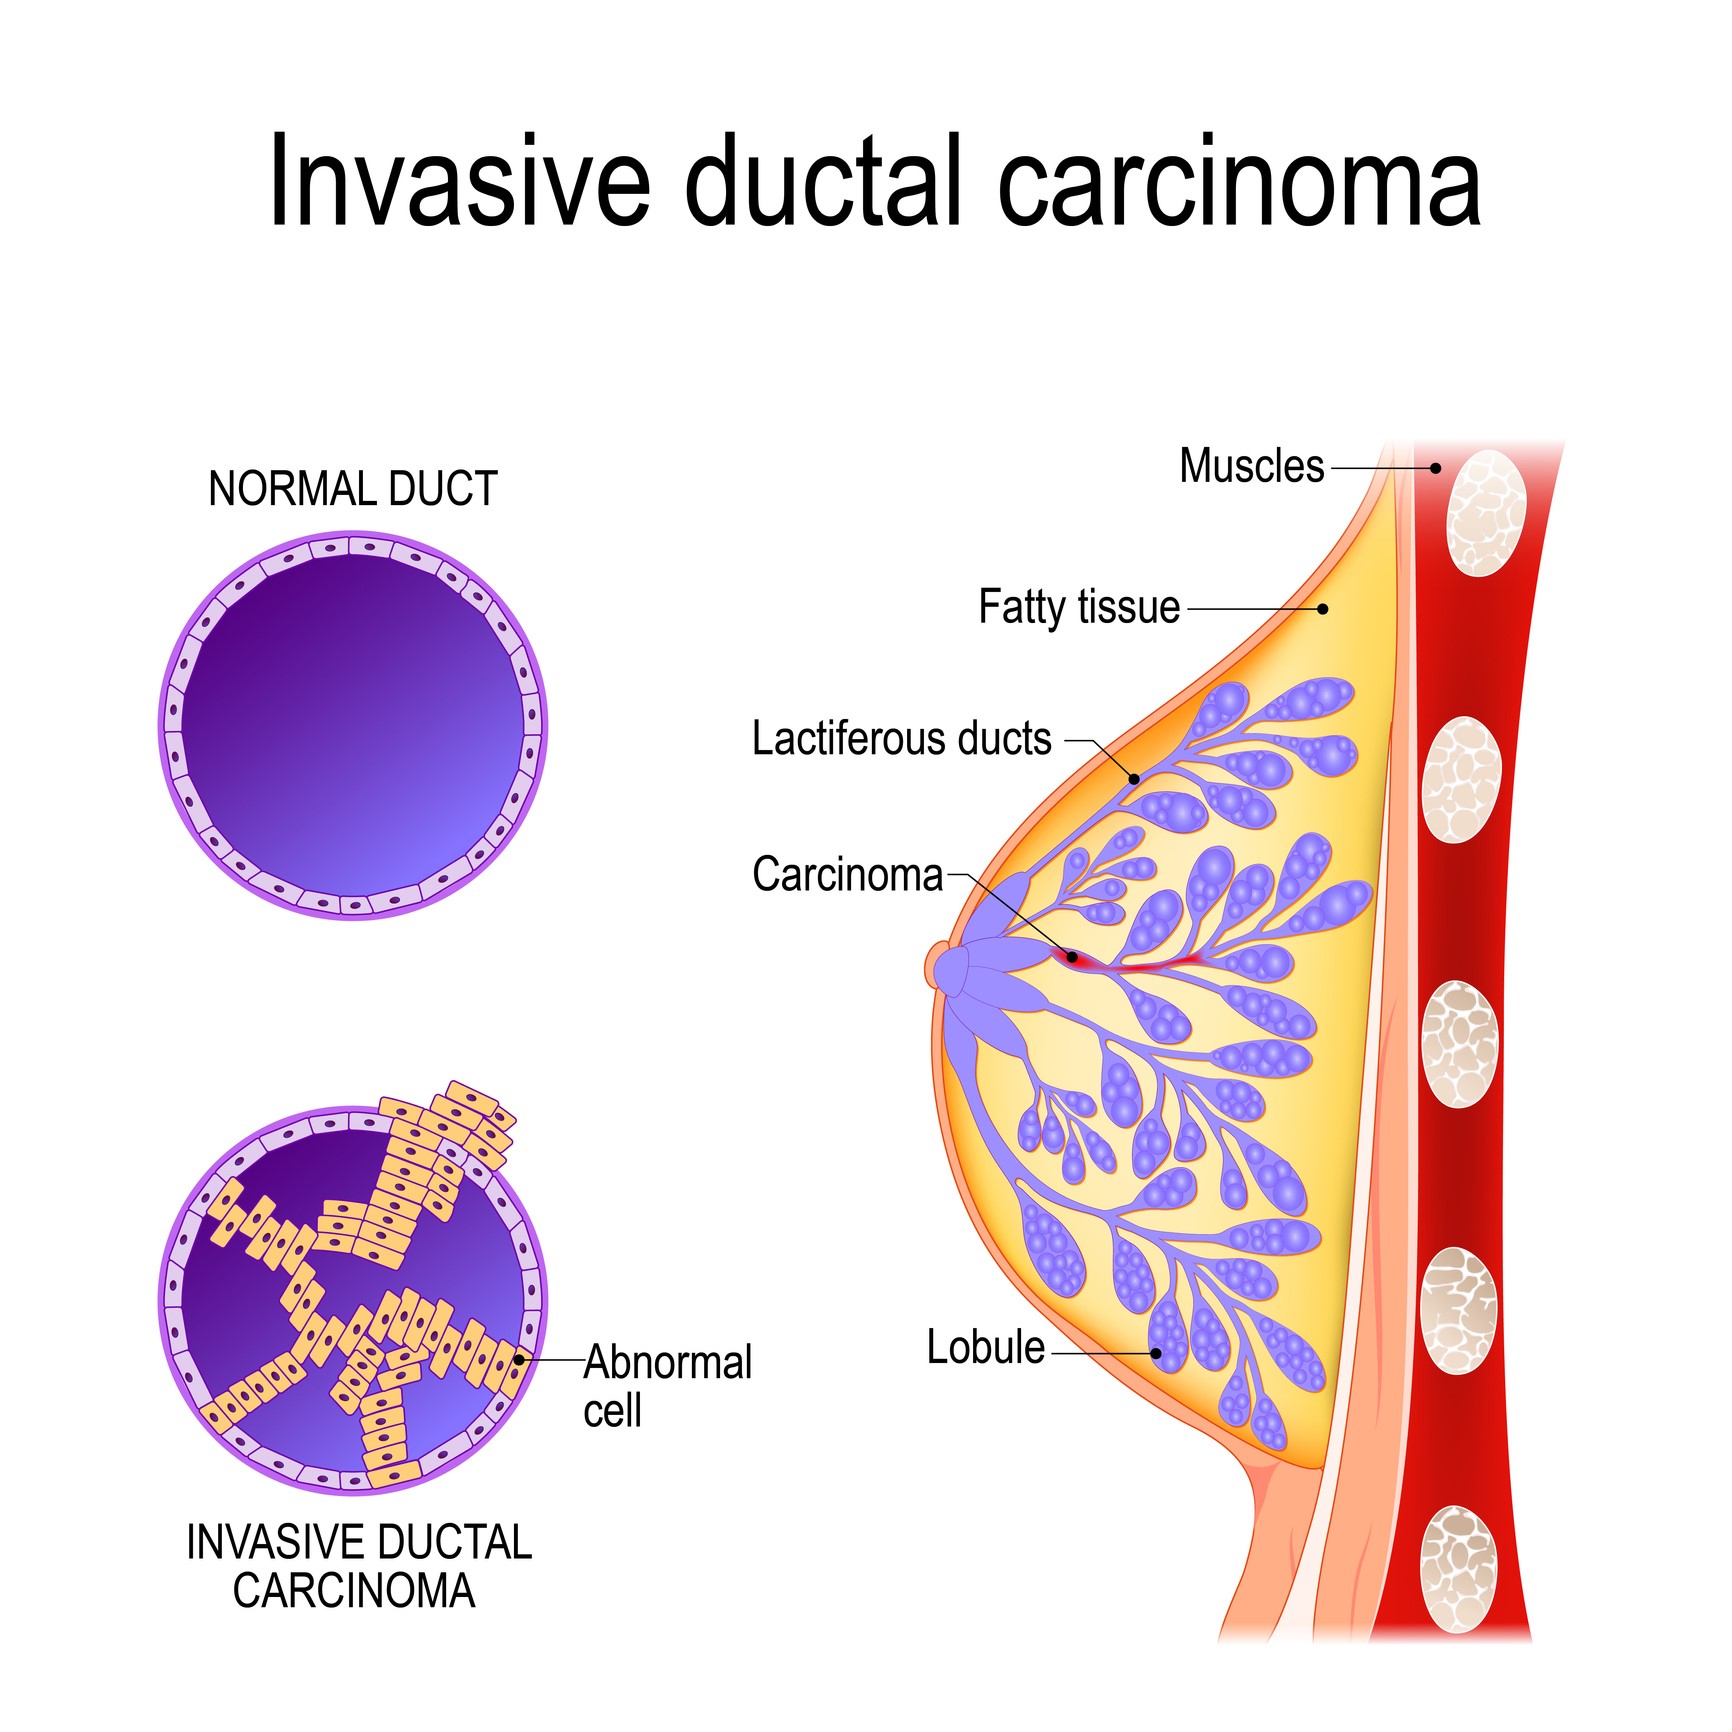 invasive ductal carcinoma case study